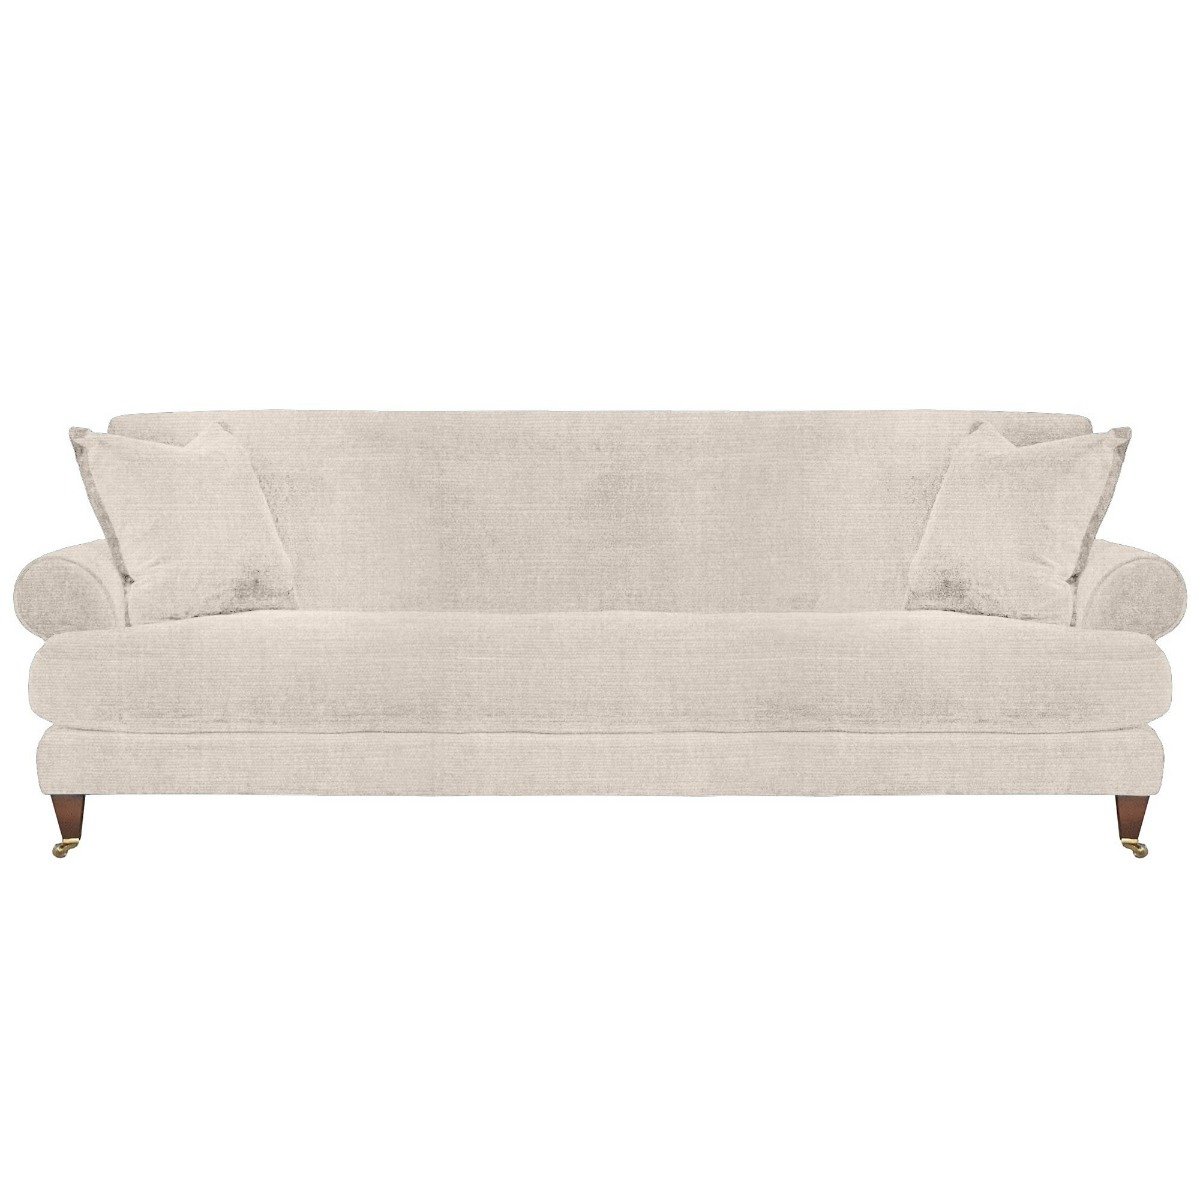 Fairlawn 4 Seater Sofa, Neutral Fabric | Barker & Stonehouse